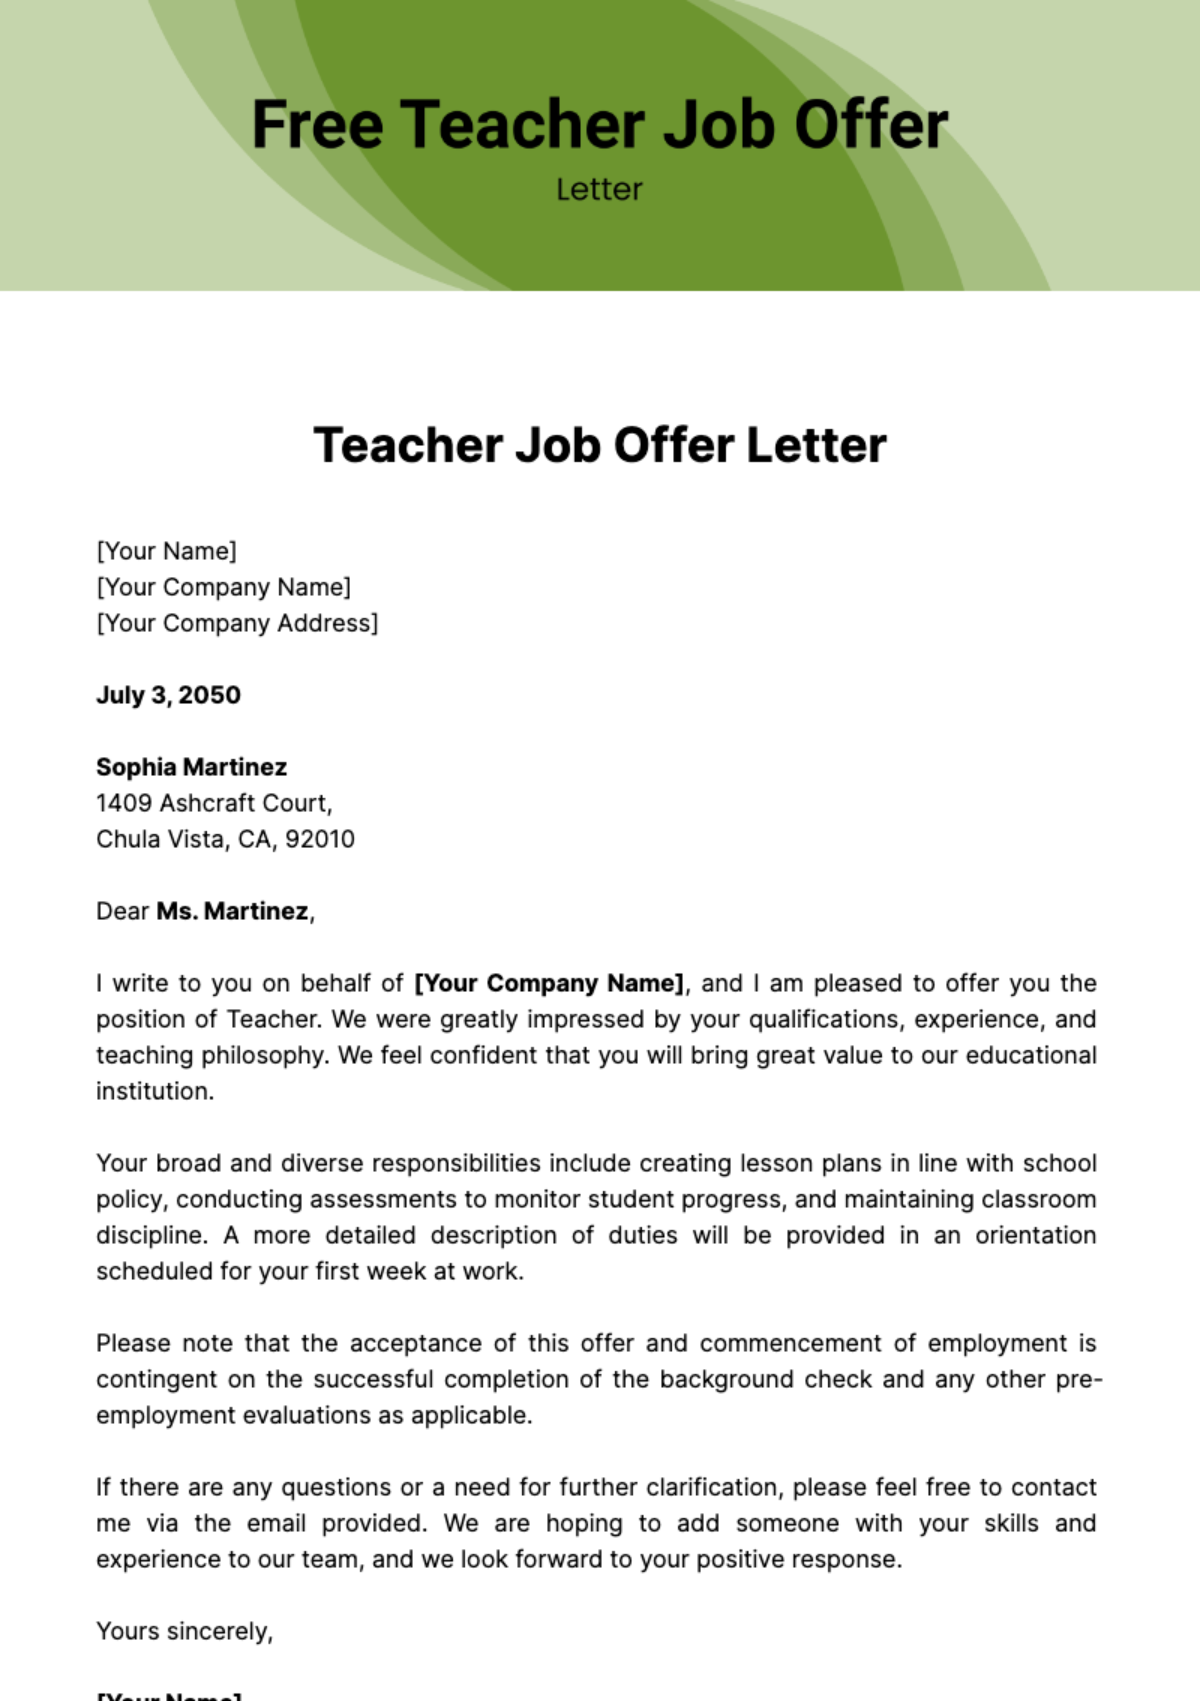 Free Teacher Job Offer Letter Template